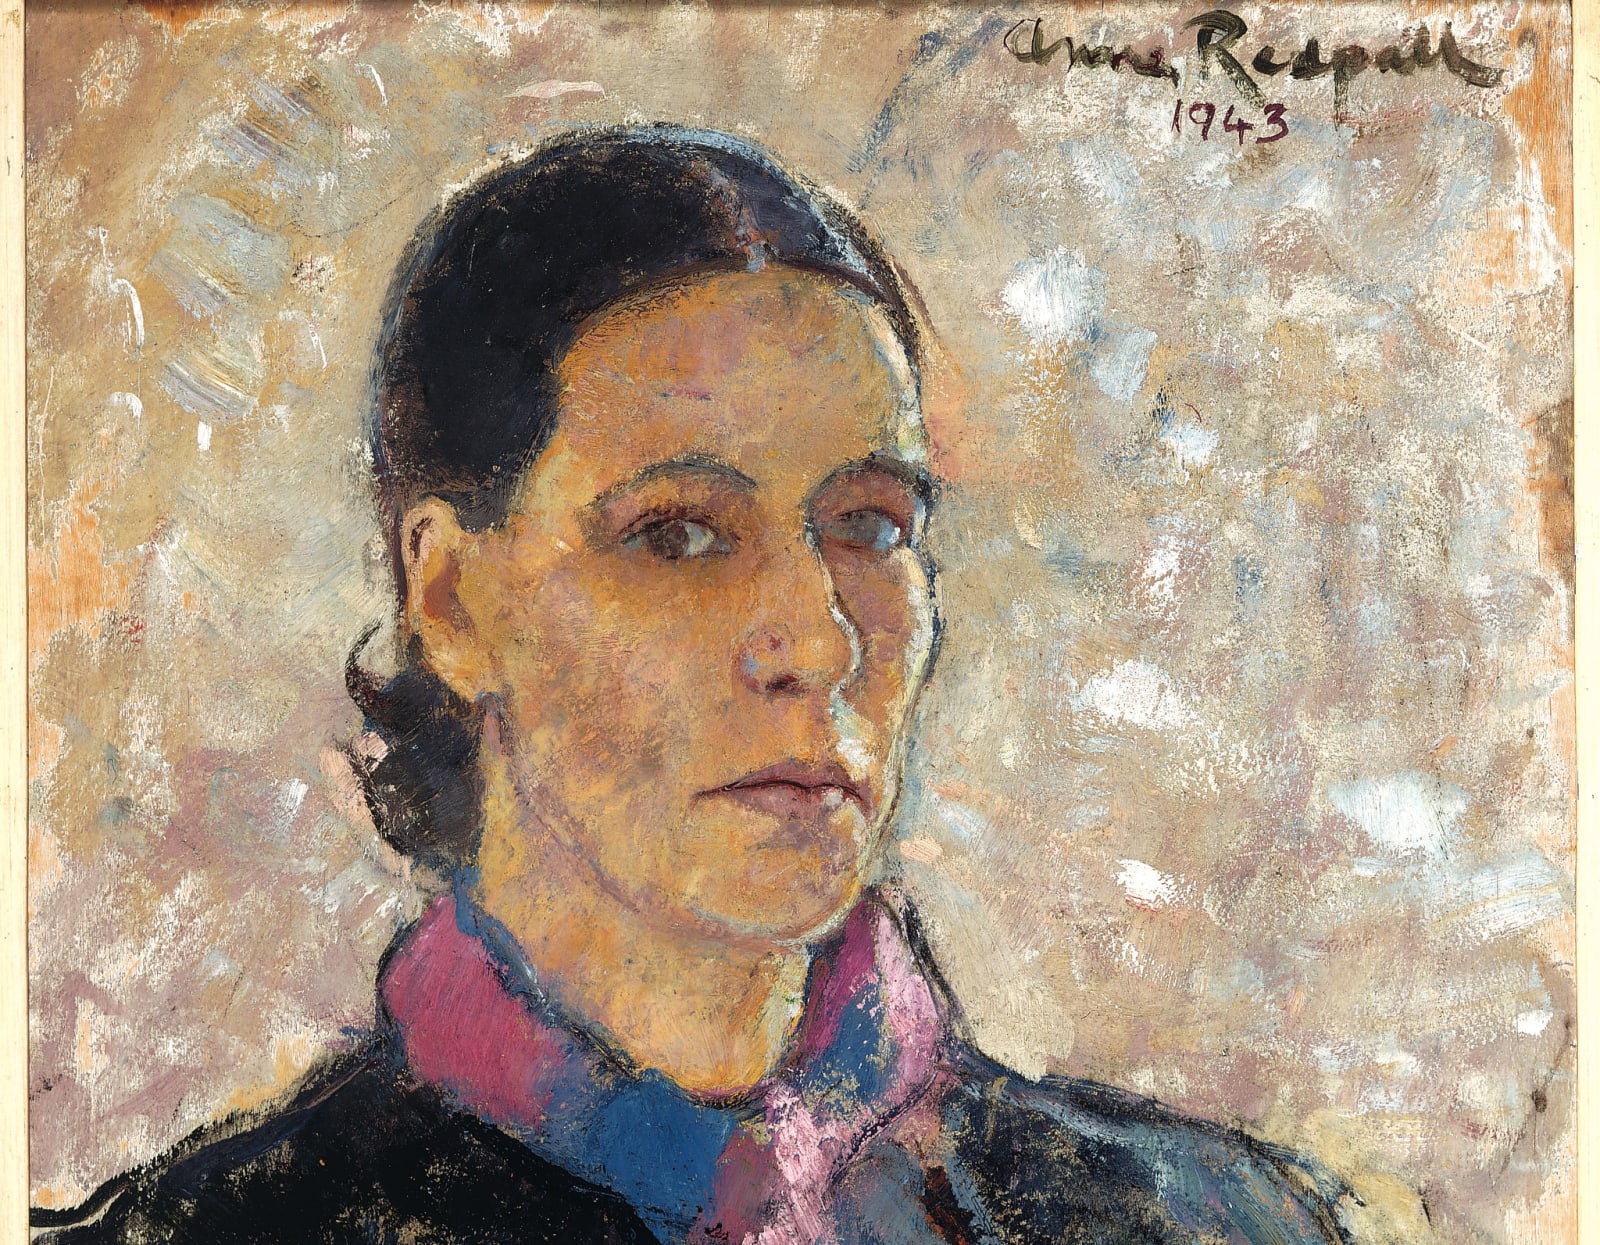 Anne Redpath, Self-Portrait, 1943